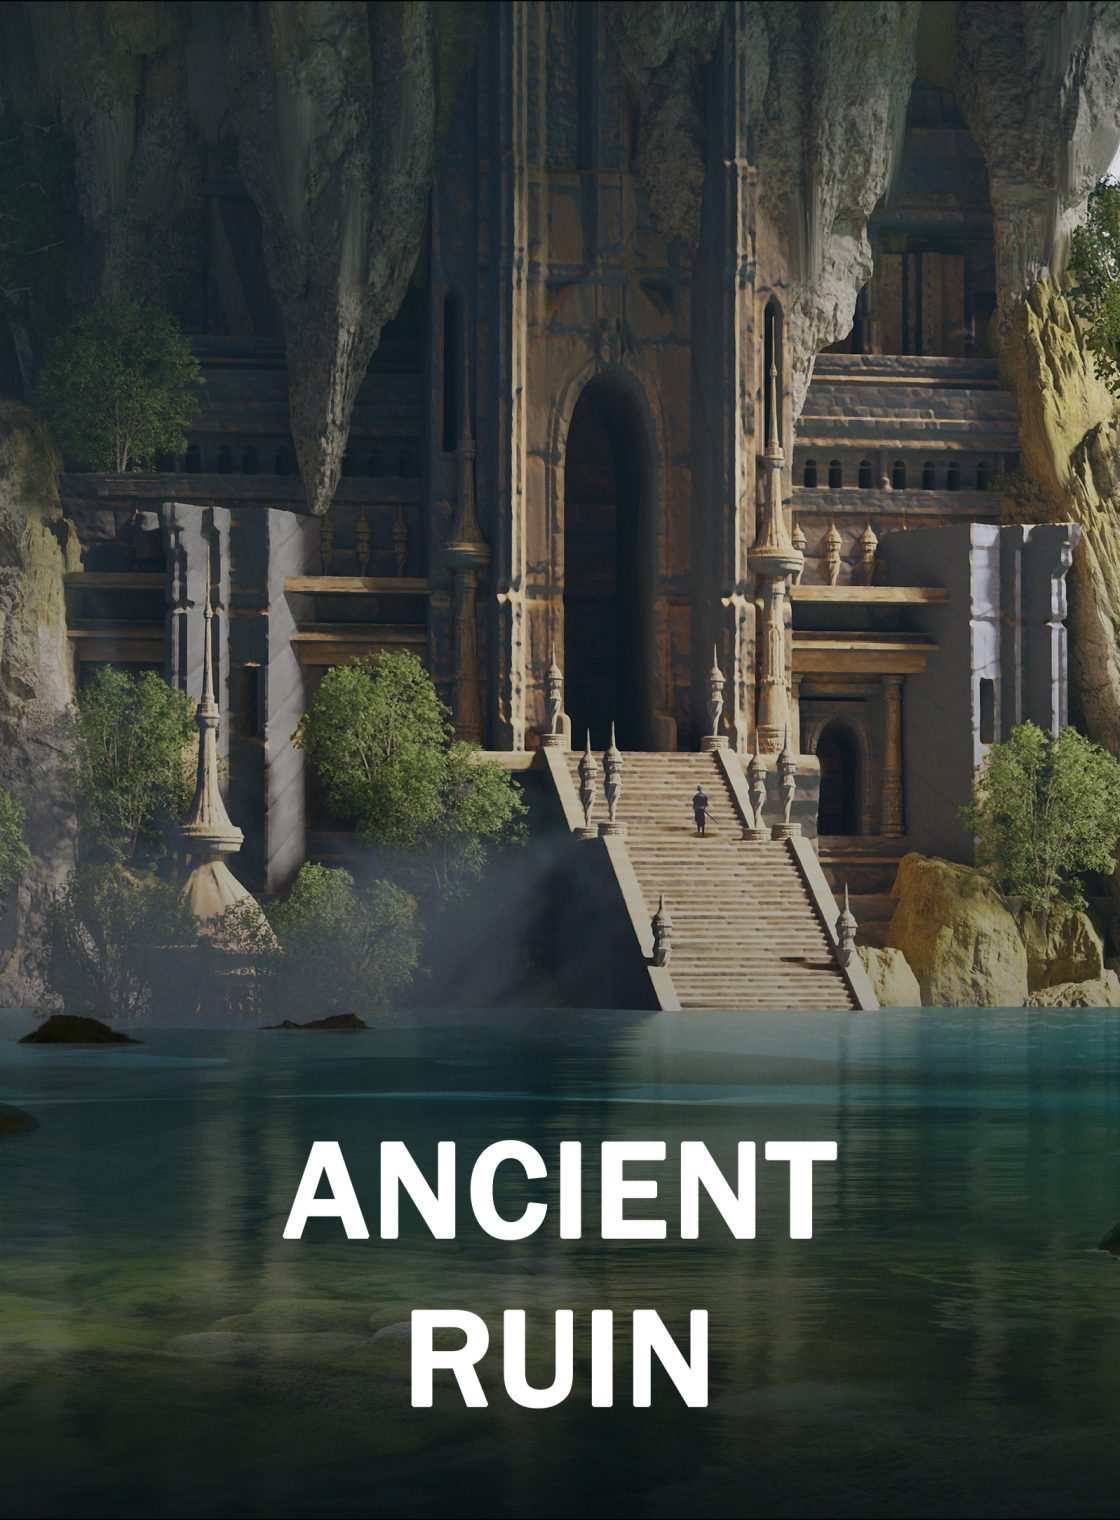 Ancient Ruin